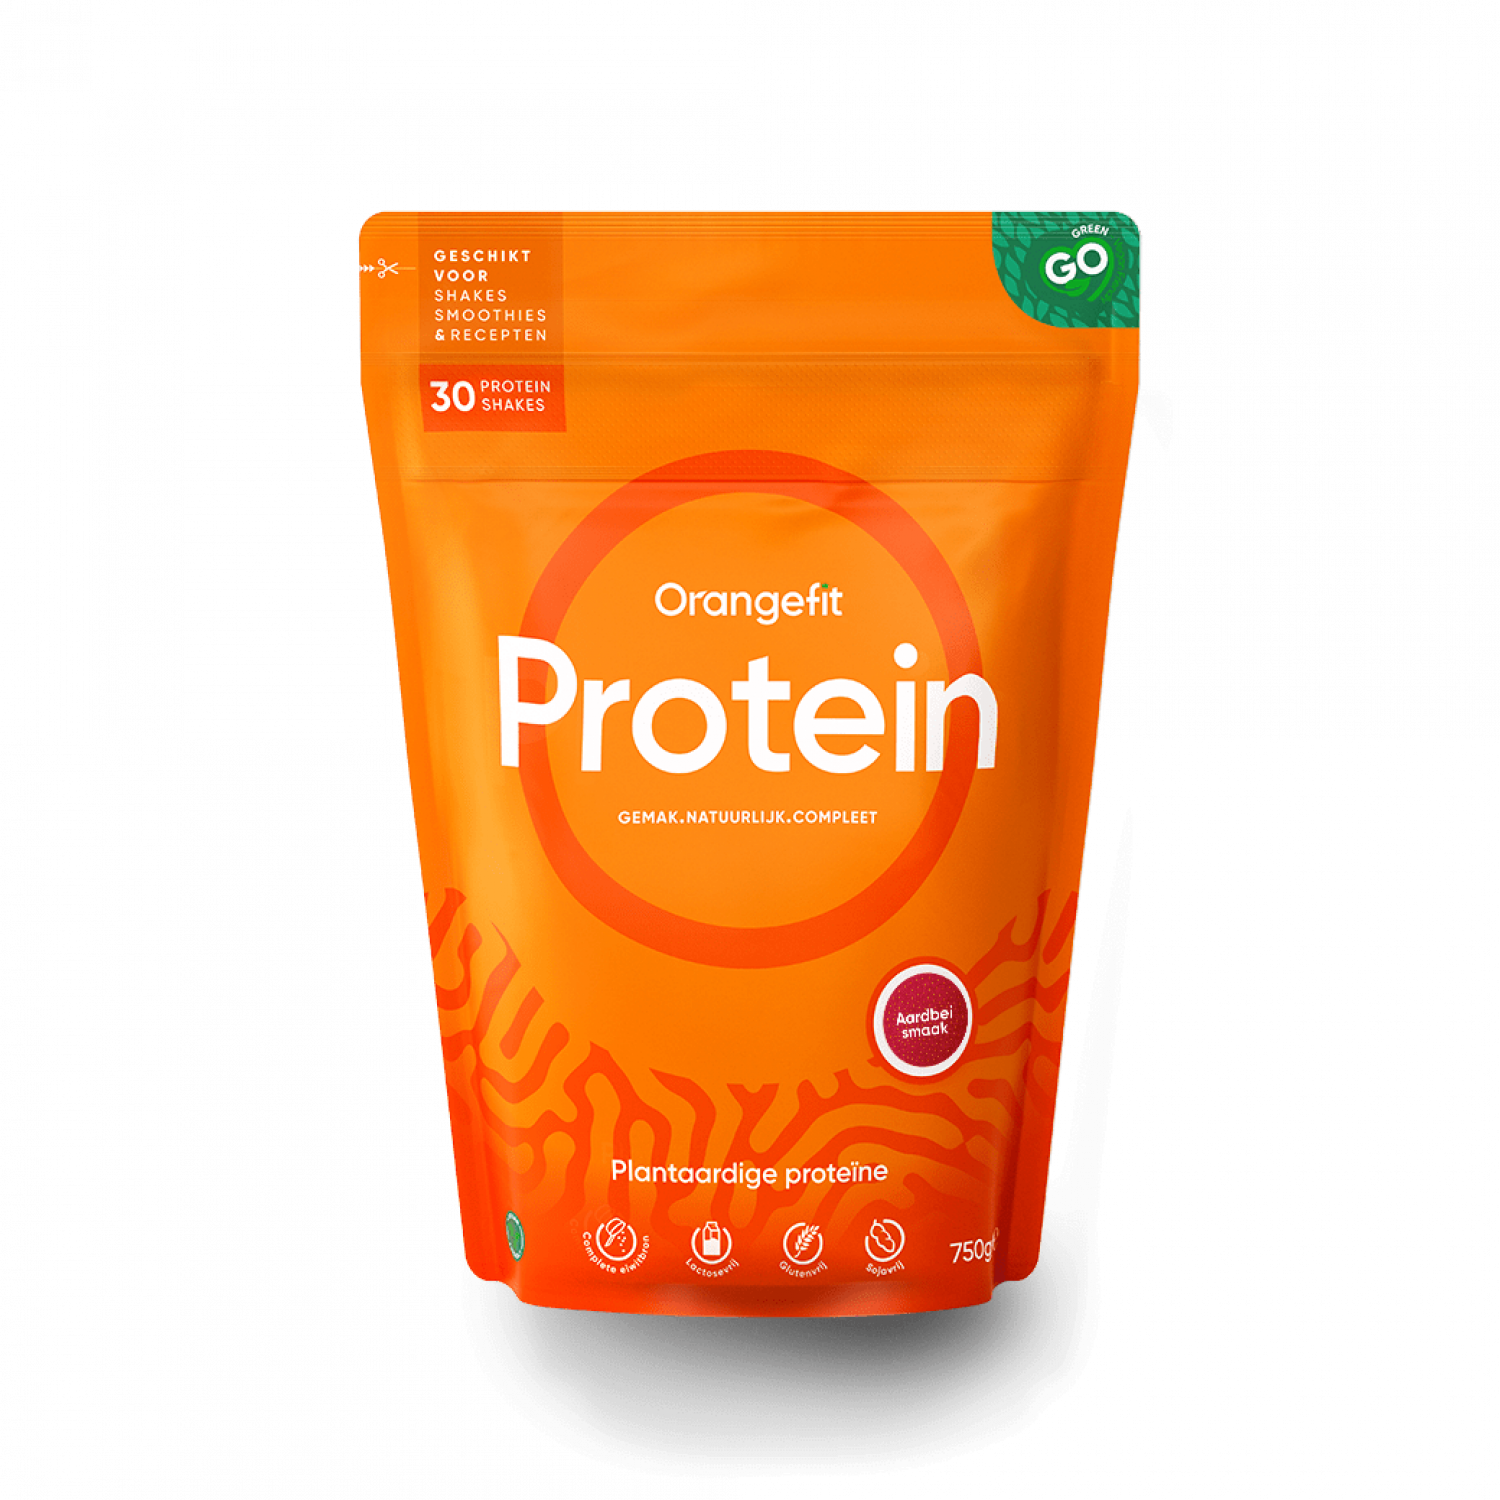 Orangefit Proteine Aardbei